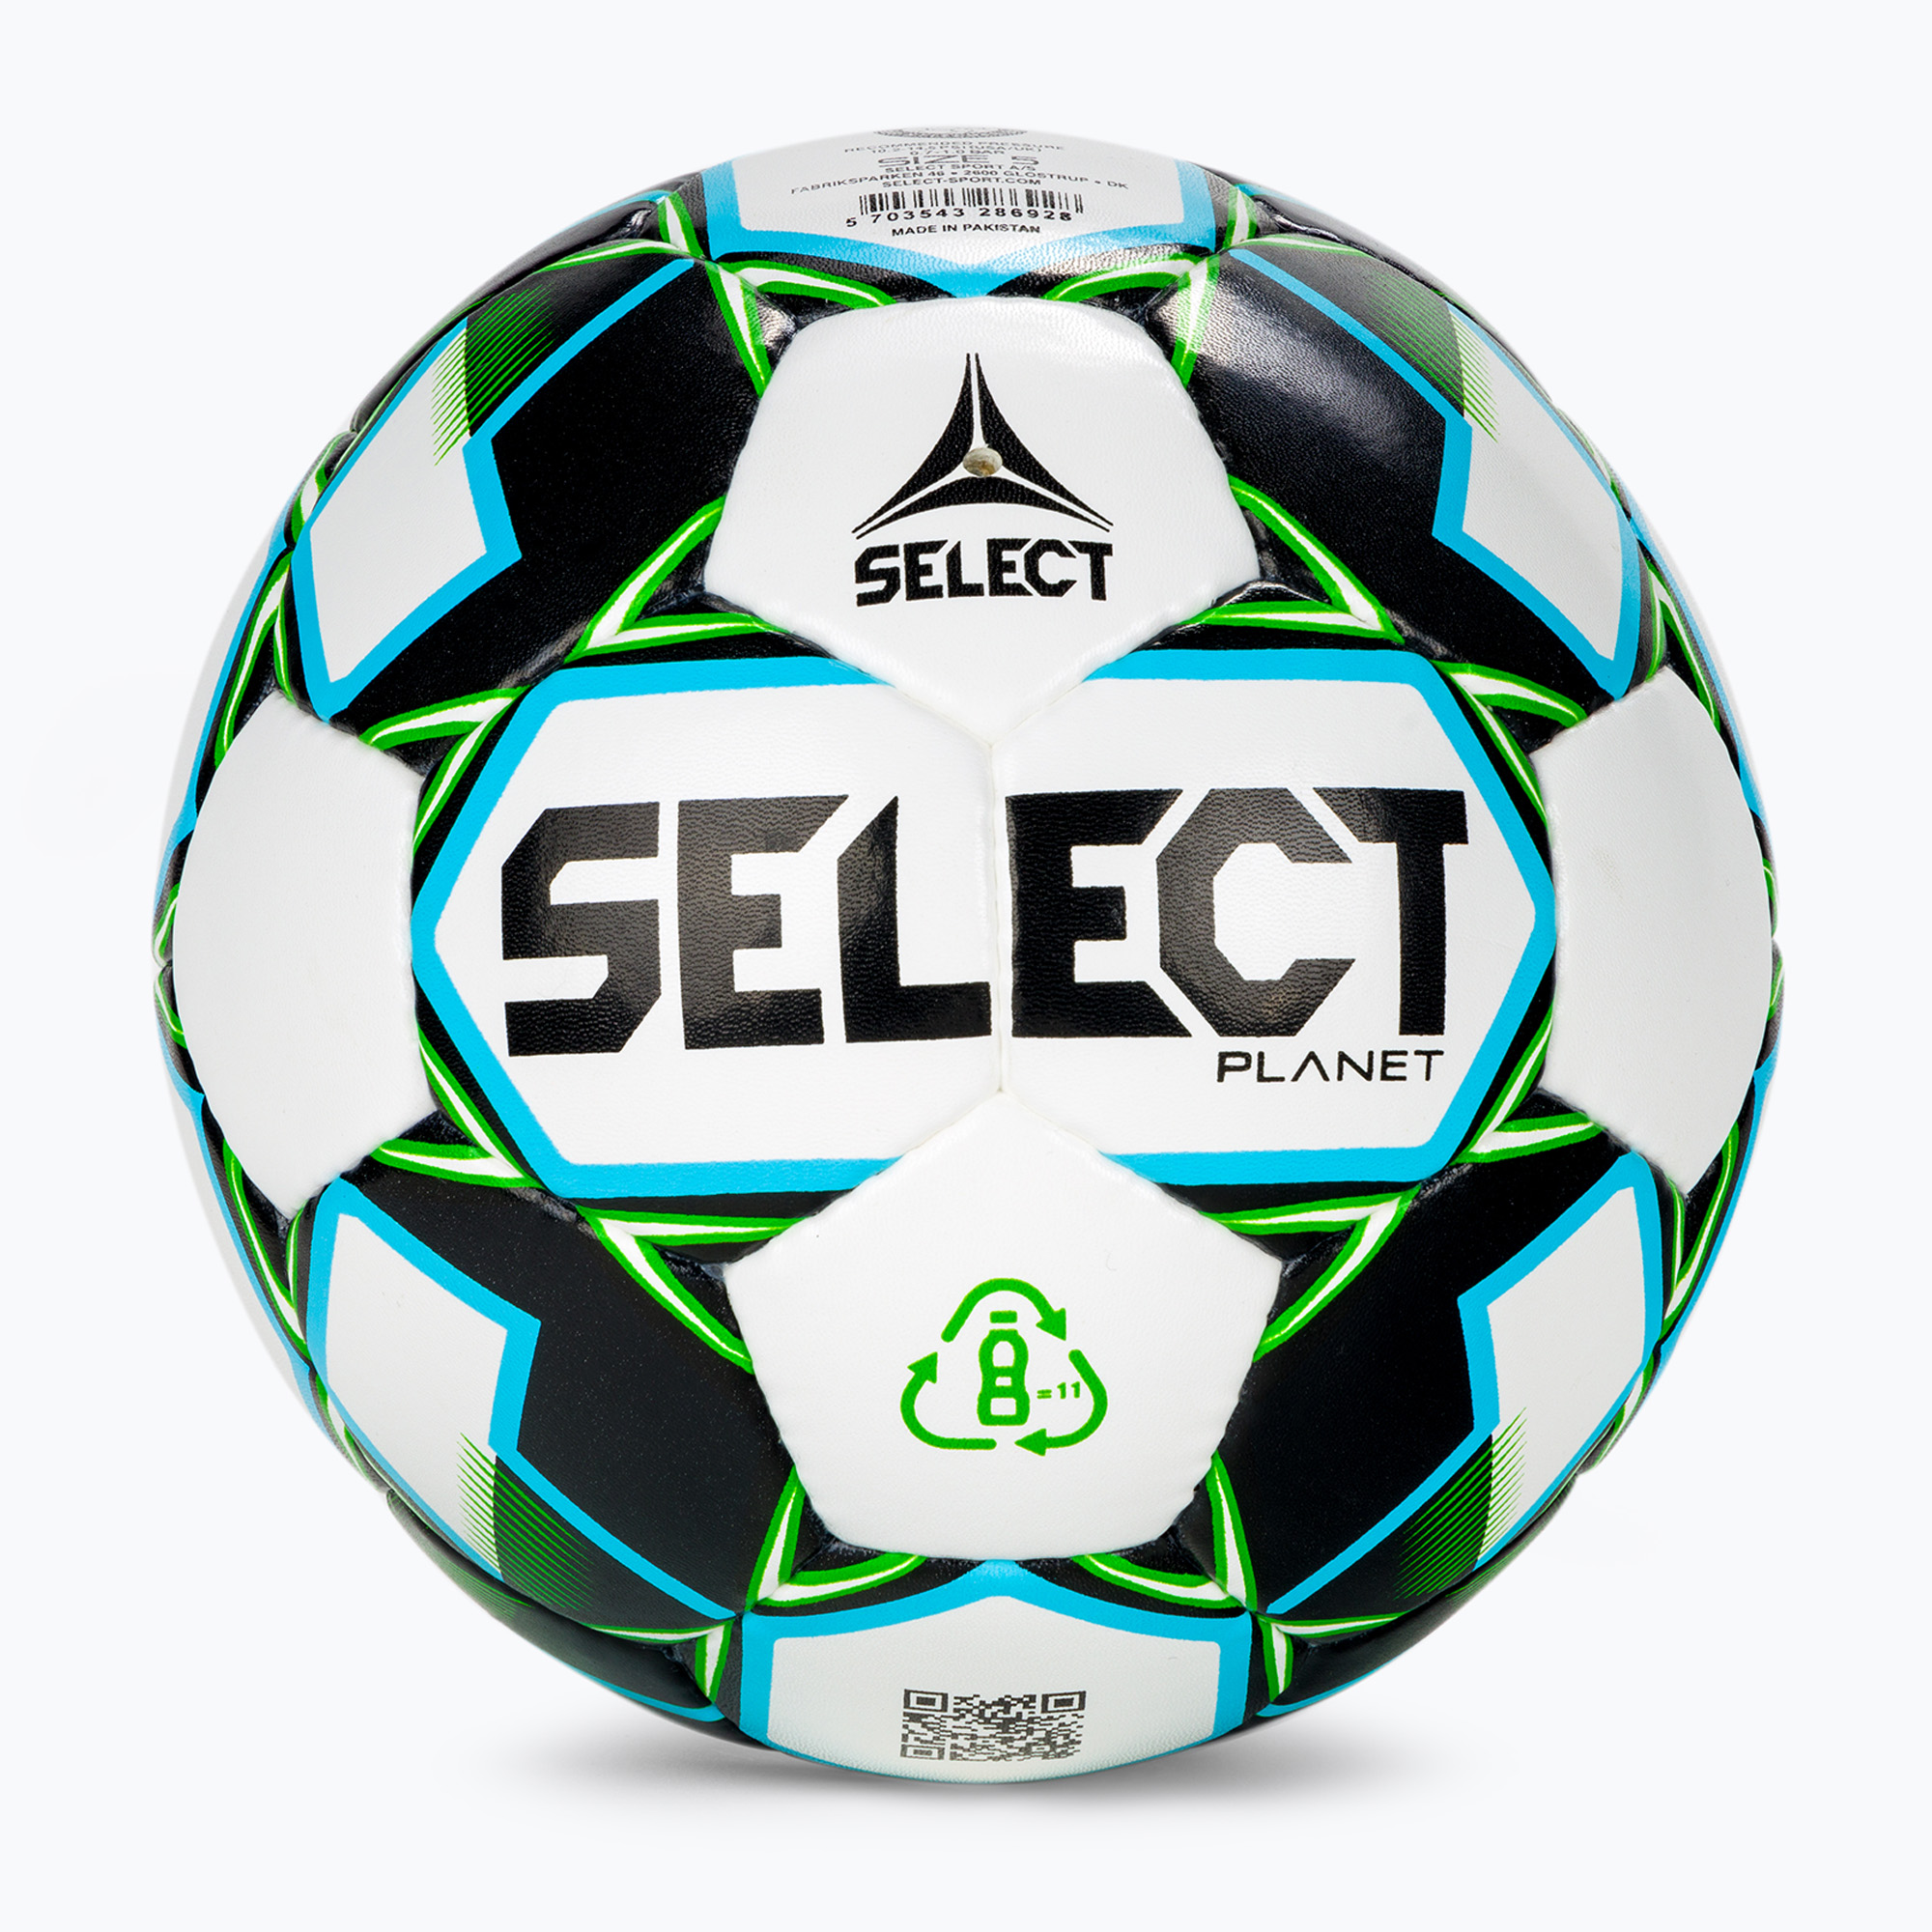 Изберете Planet футбол бяло и зелено 110040-5